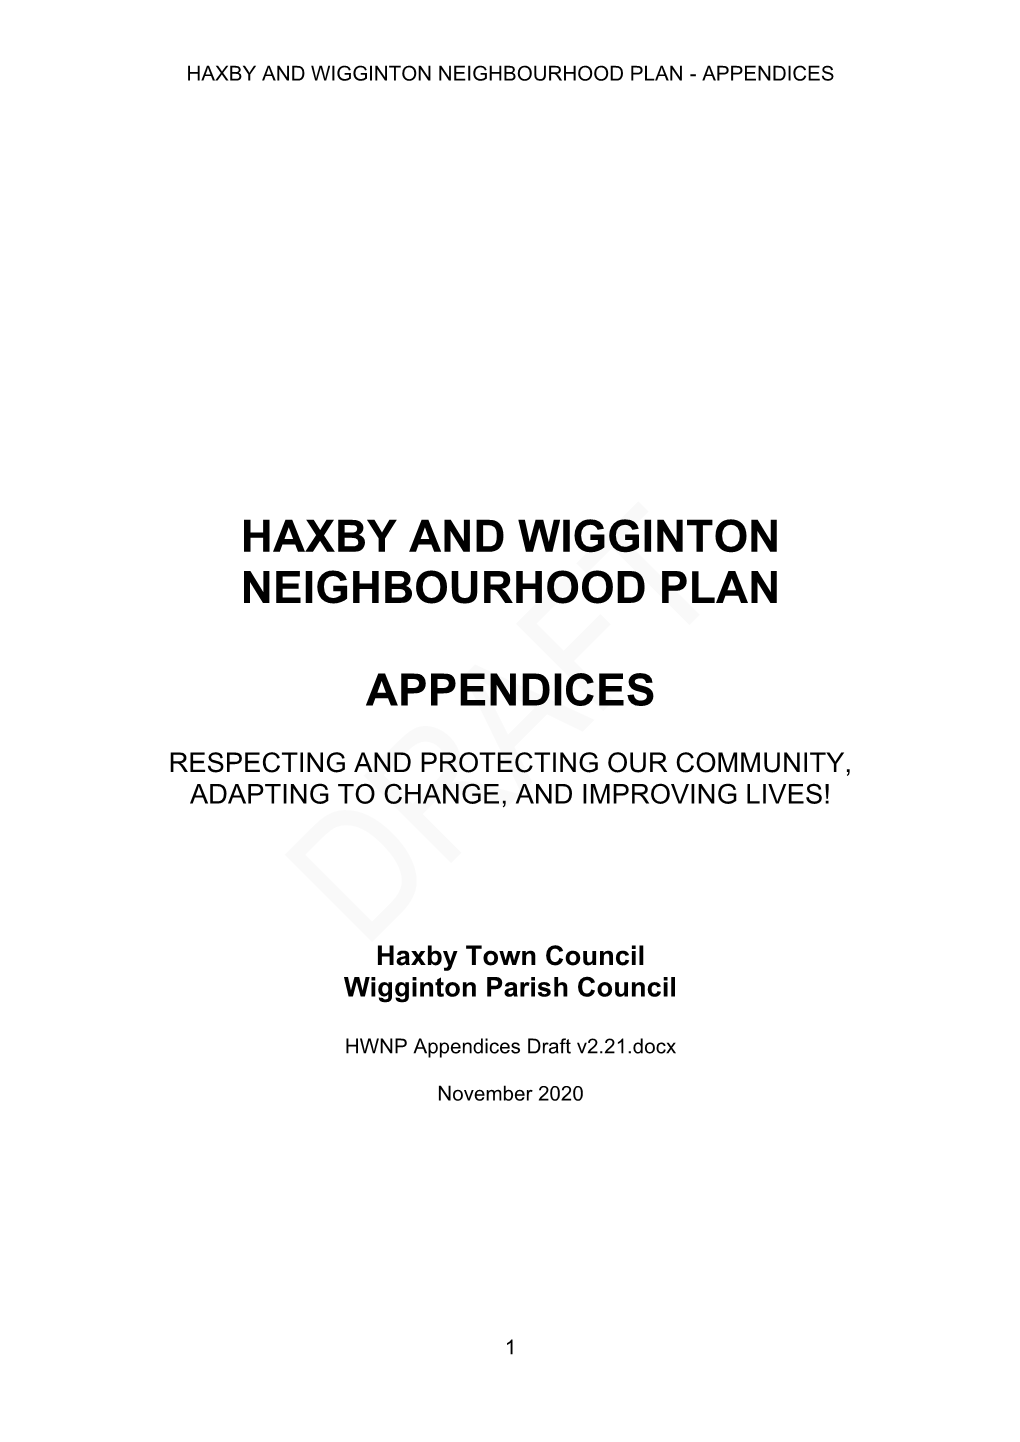 Haxby and Wigginton Neighbourhood Plan - Appendices